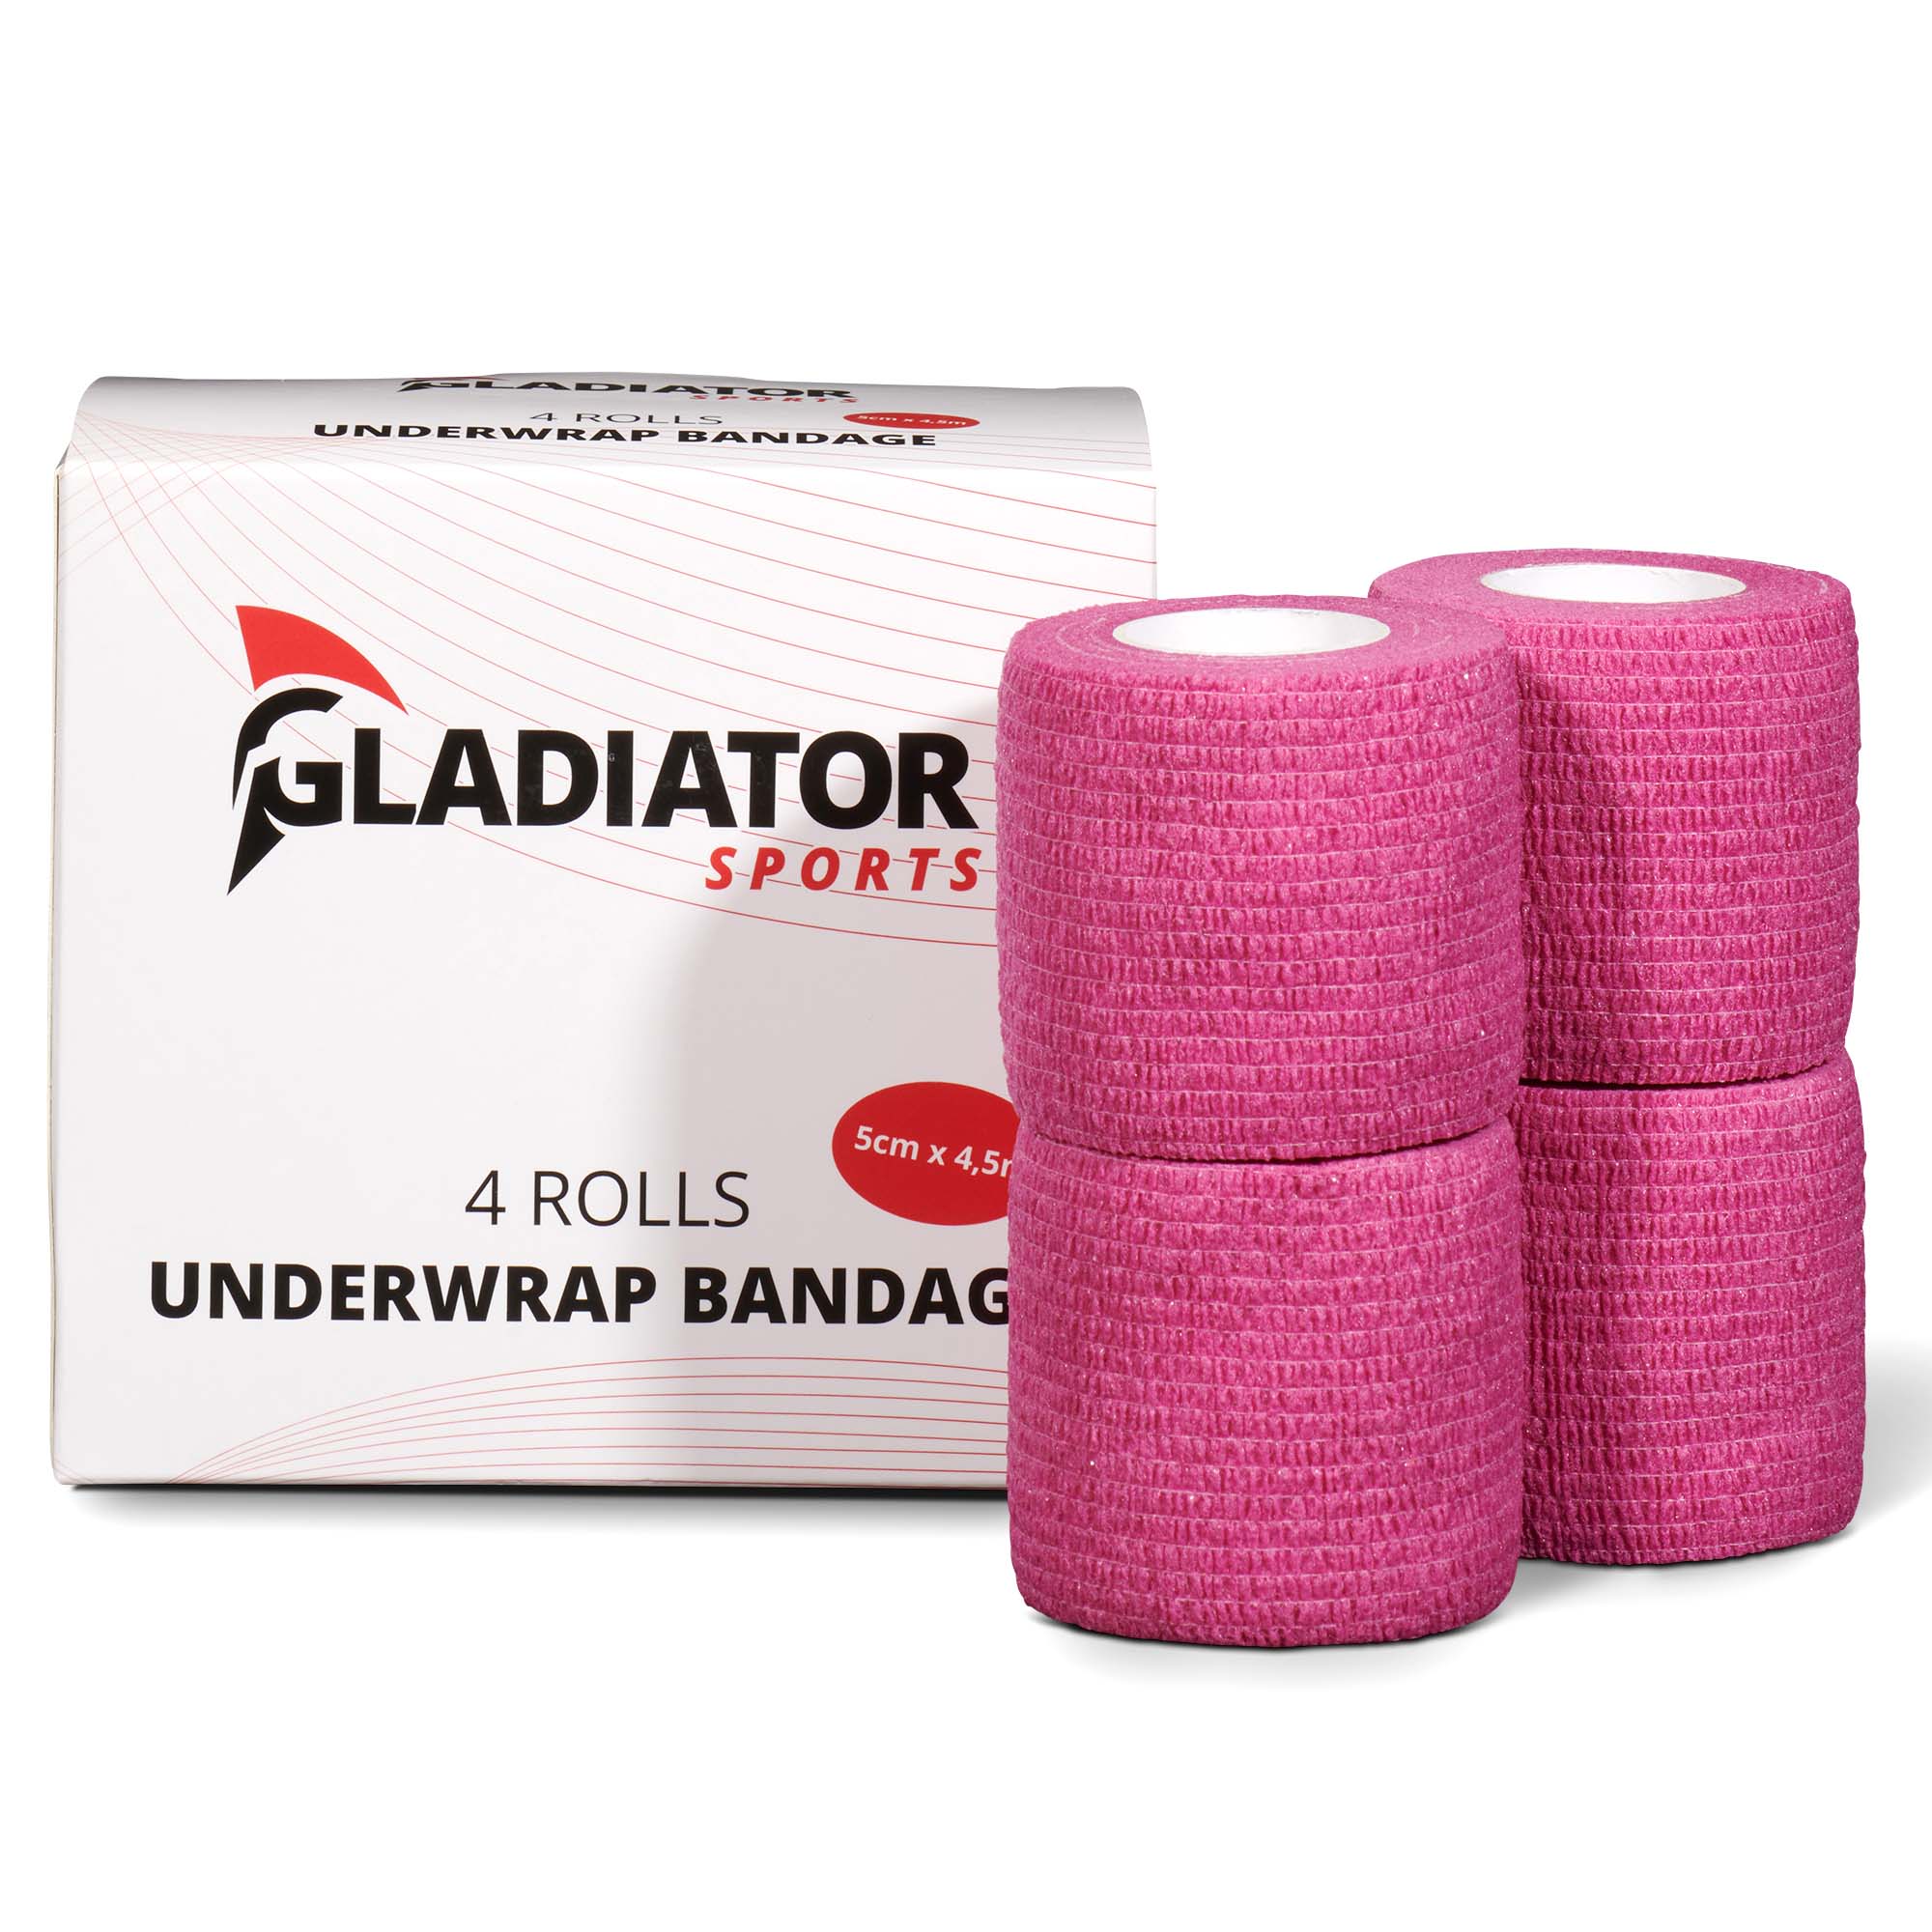 Gladiator Sports underwrap bandage per 4 rolls pink with box